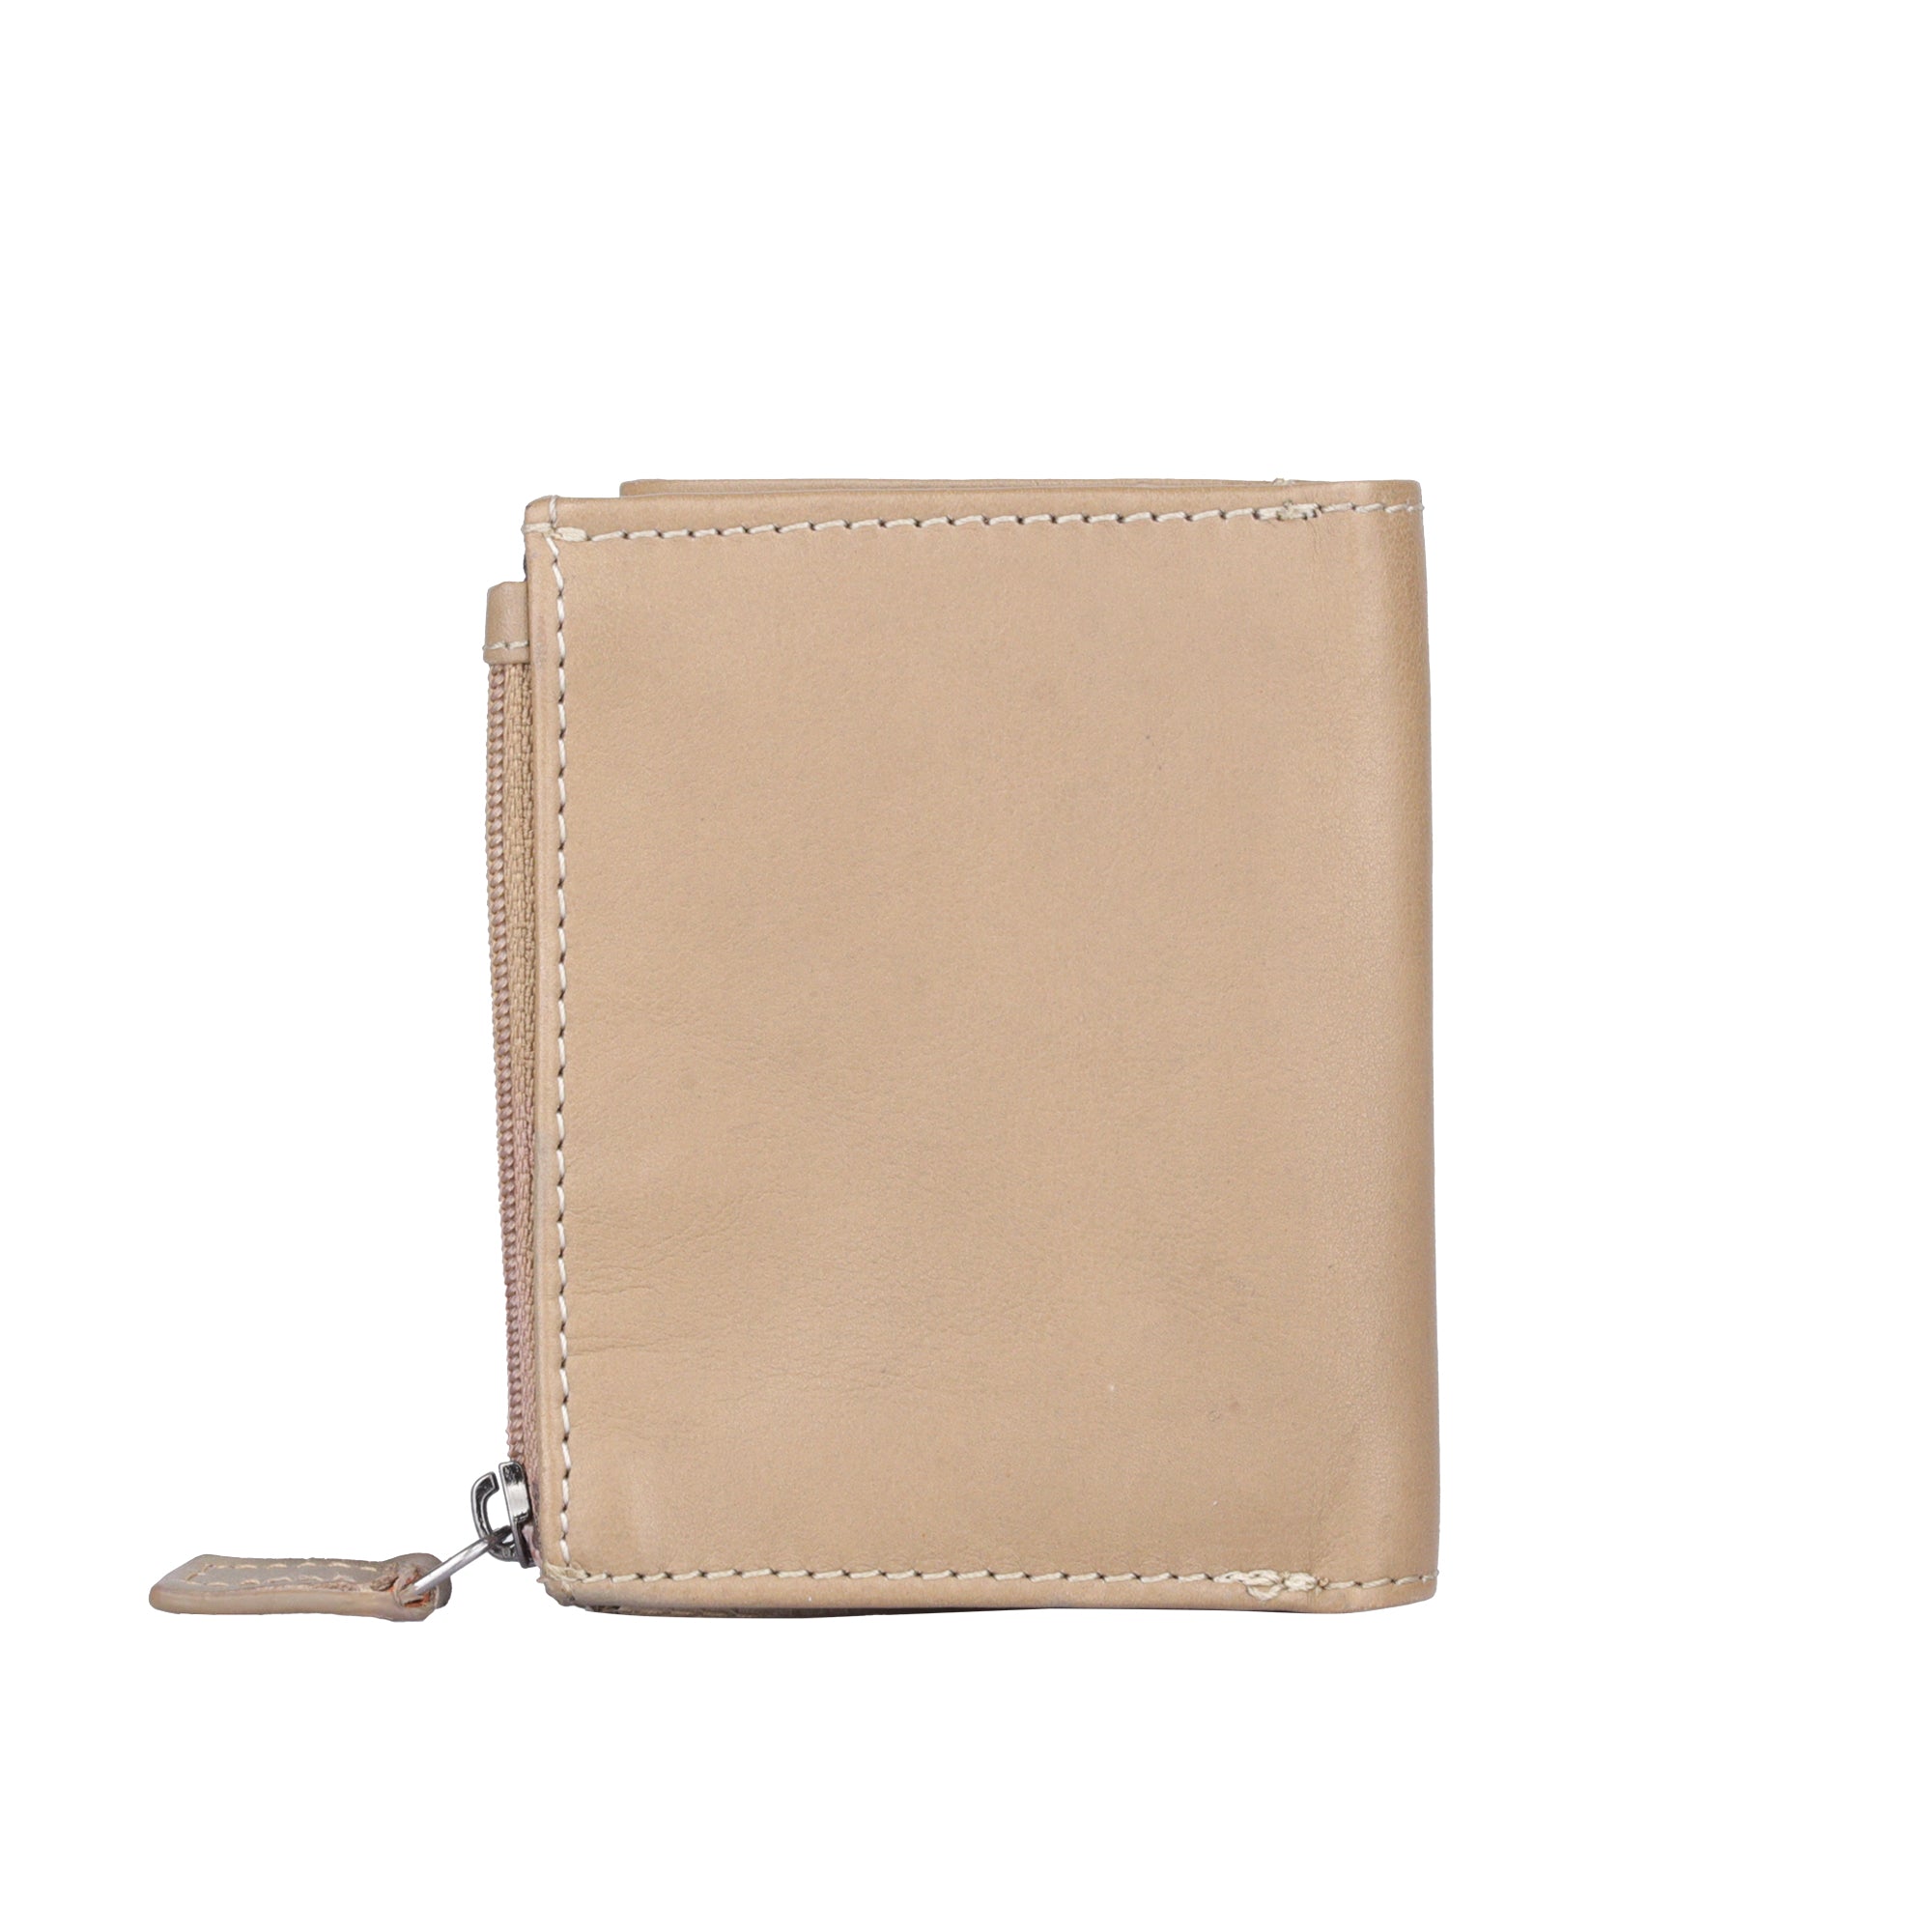 Tom - leather wallet/card case